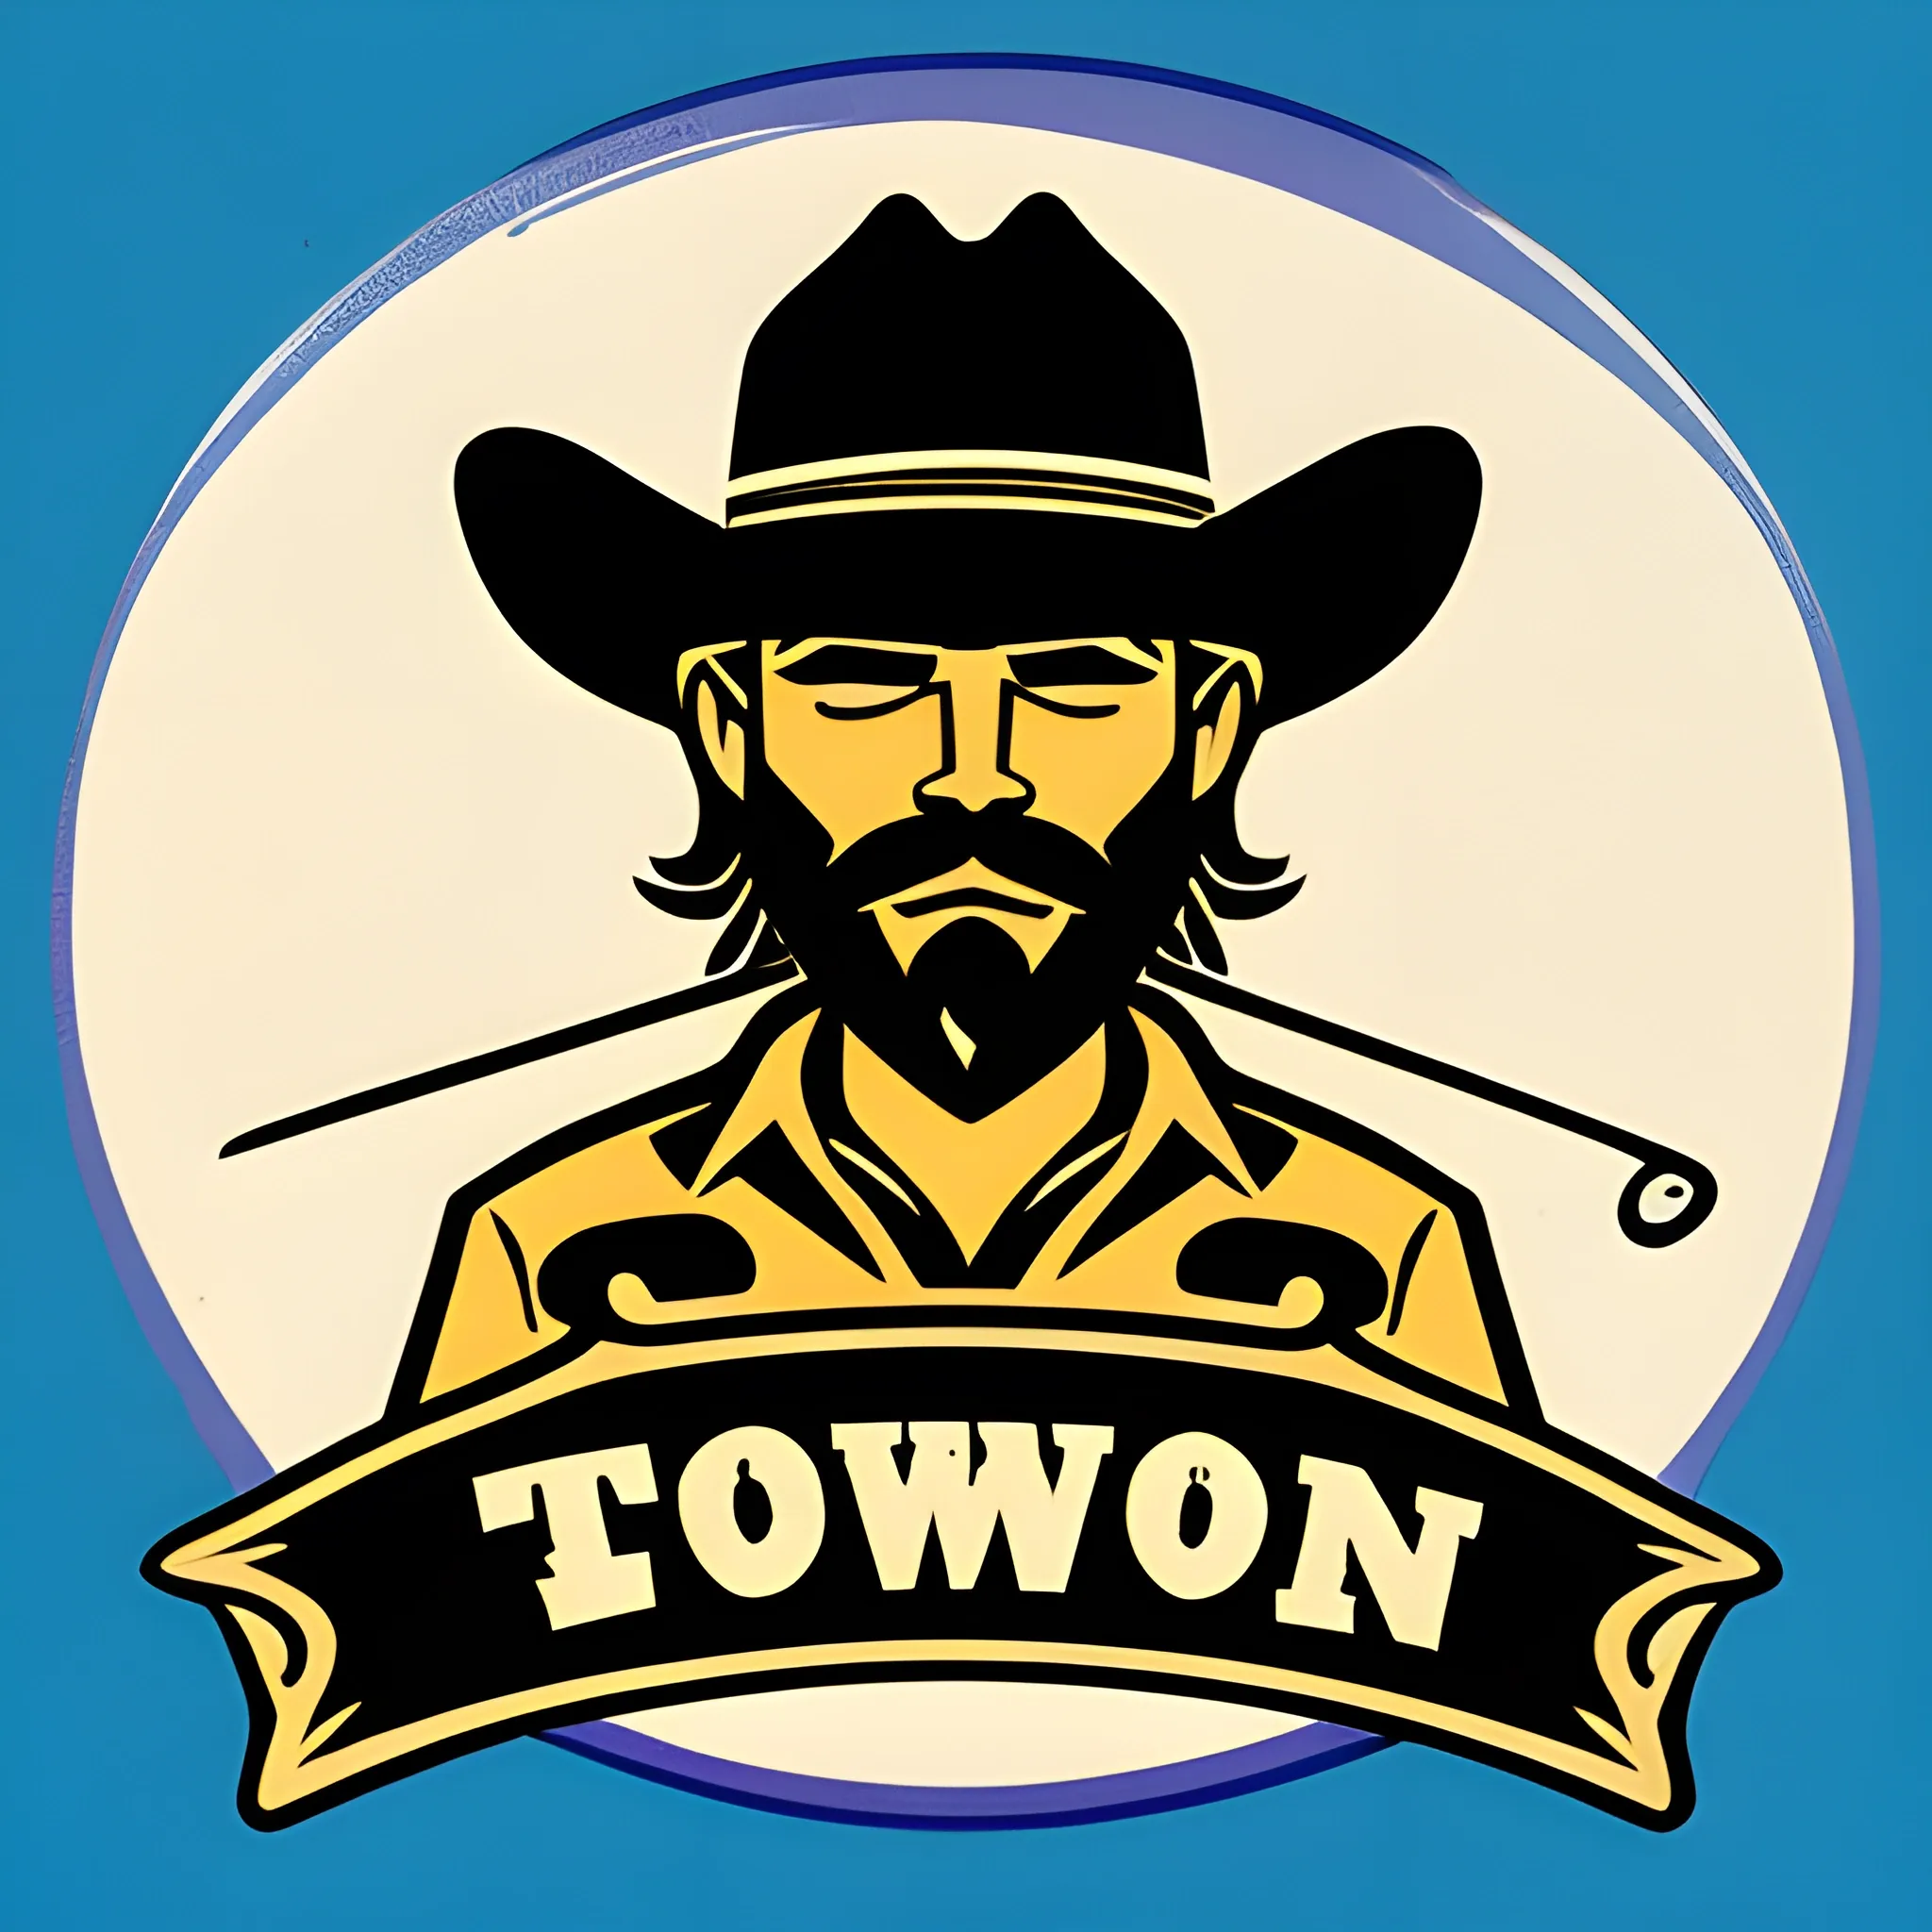 cowboy hat logo likes fishing, Cartoon, Trippy